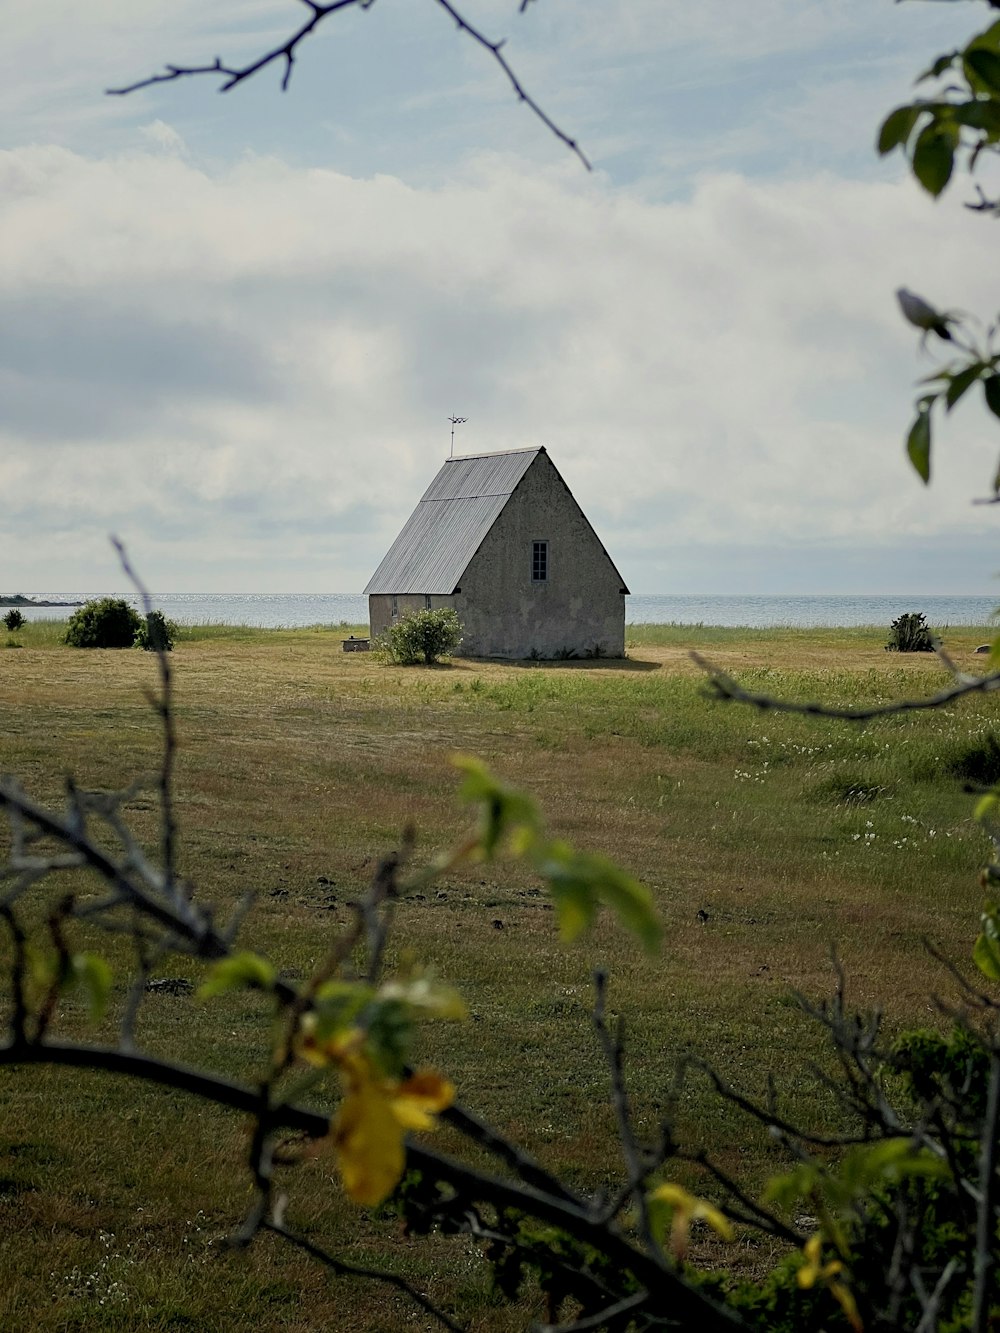 a small church in a field